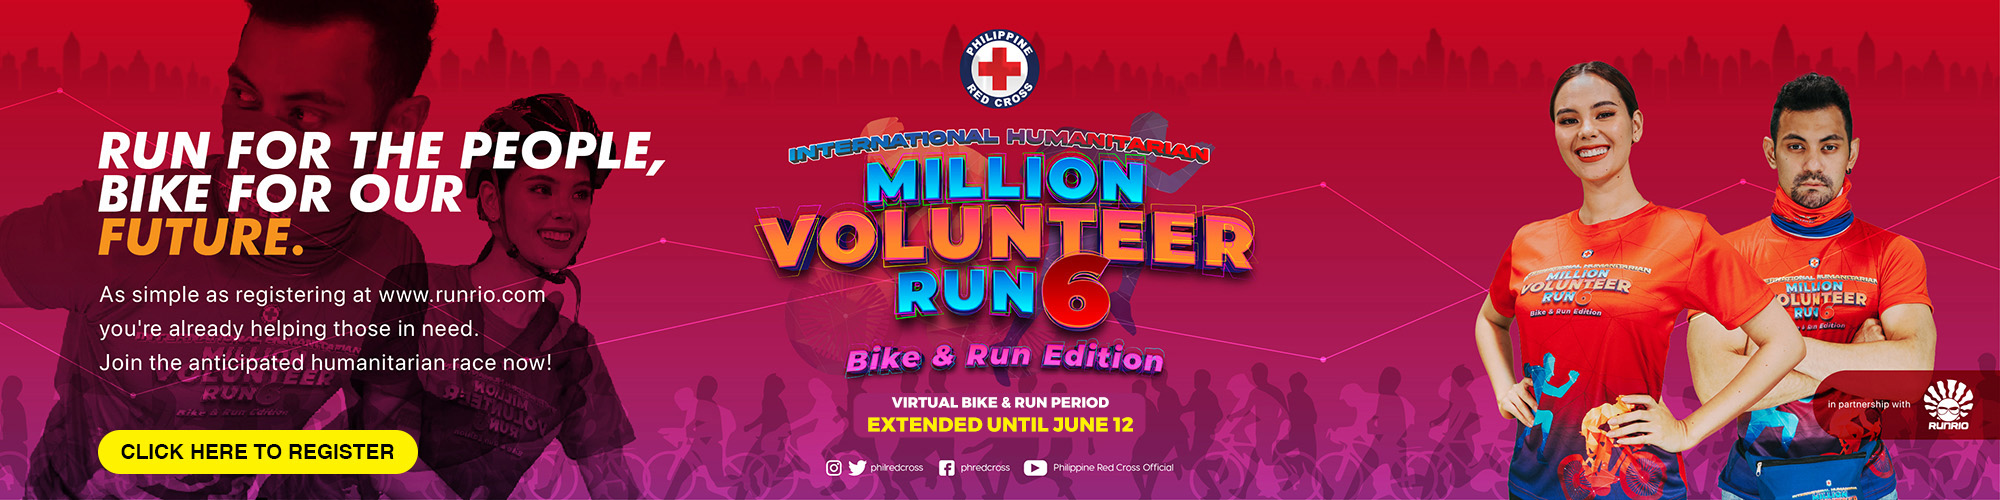 Million Volunteer Run 6 Virtual Period EXTENDED